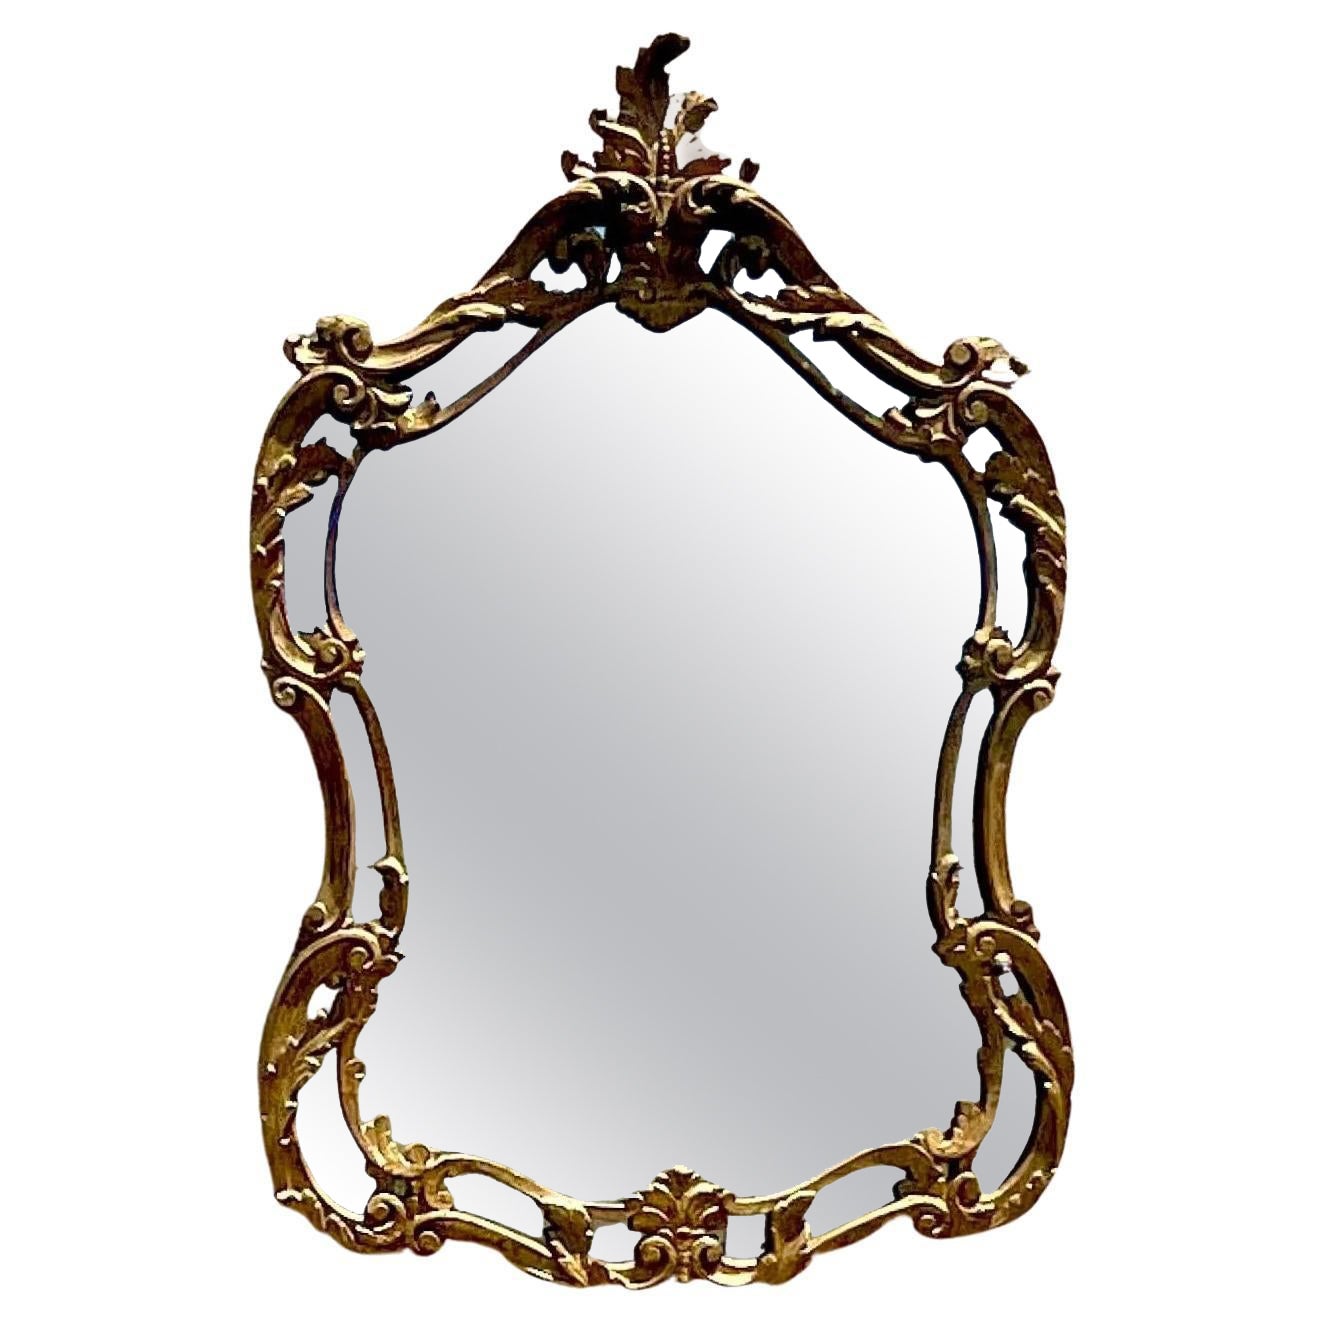 Vintage Regency Gilt Mirror